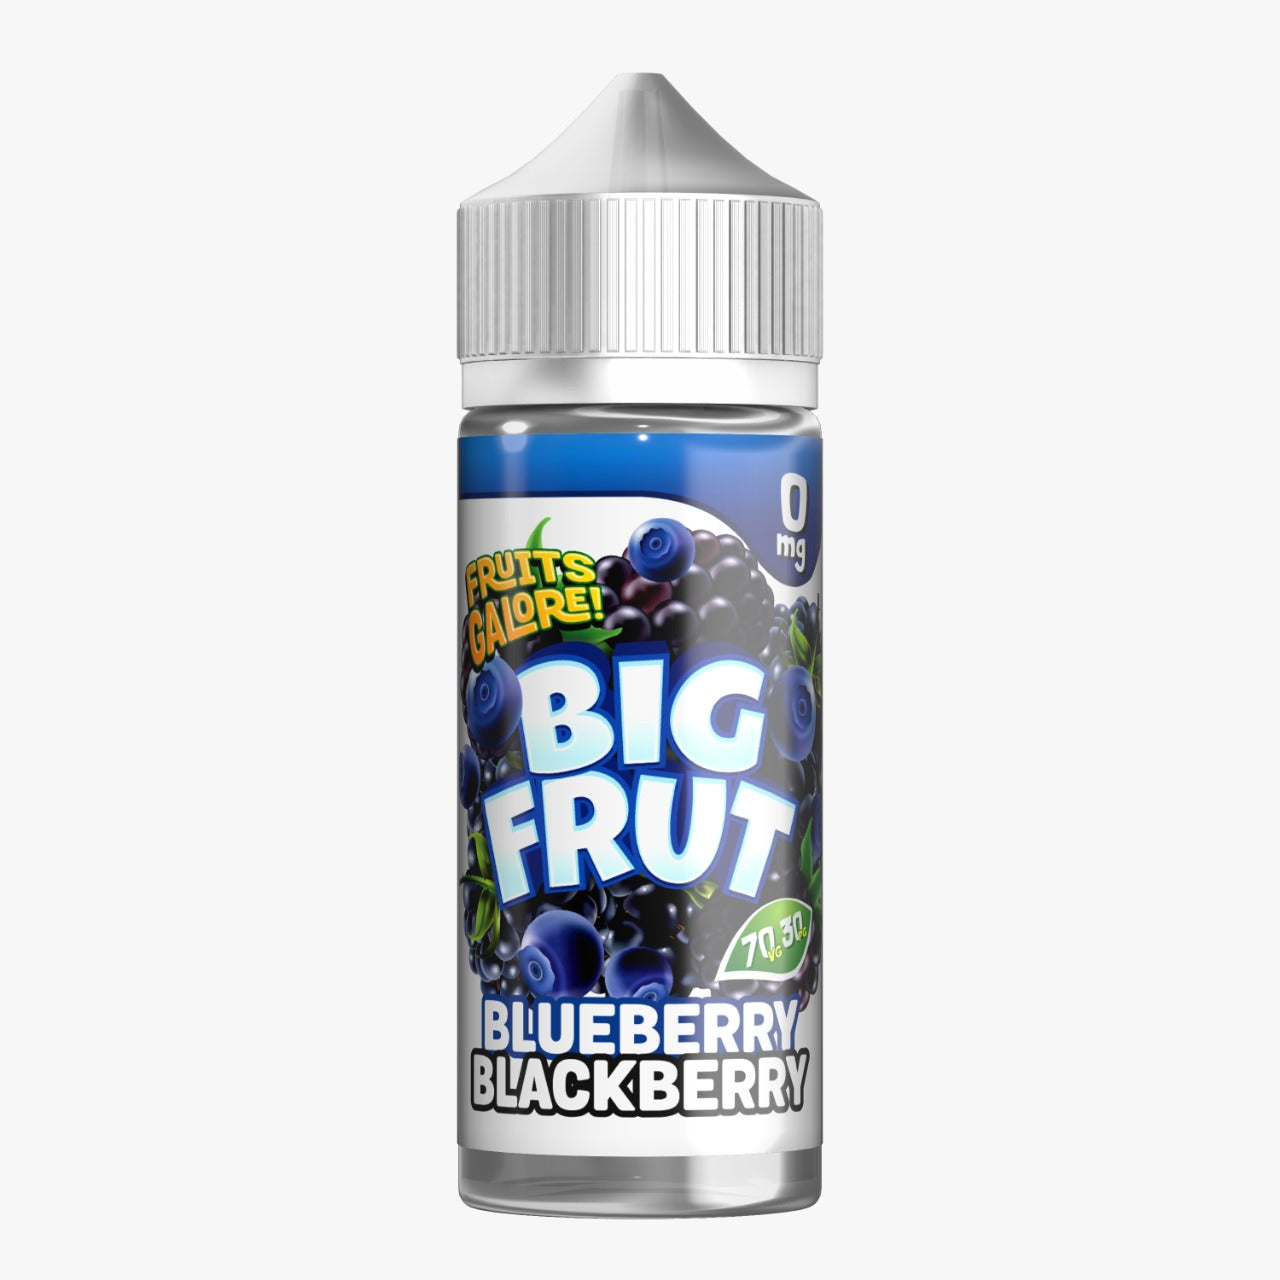 Big Frut - Blueberry Blackberry